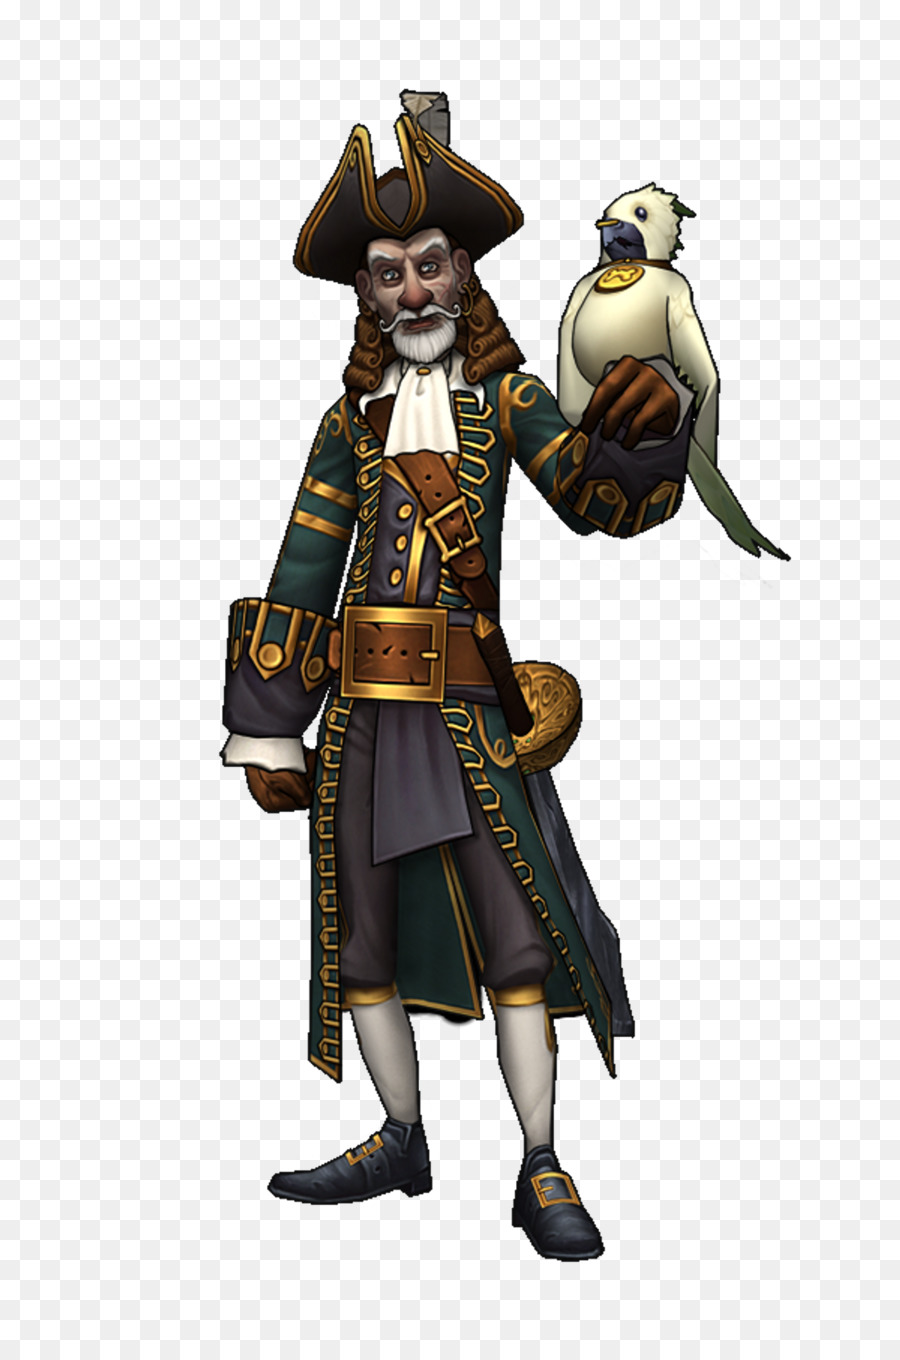 Pirate101 Wizard101-Piraterie Republik der Piraten Avery Dennison - Piraten